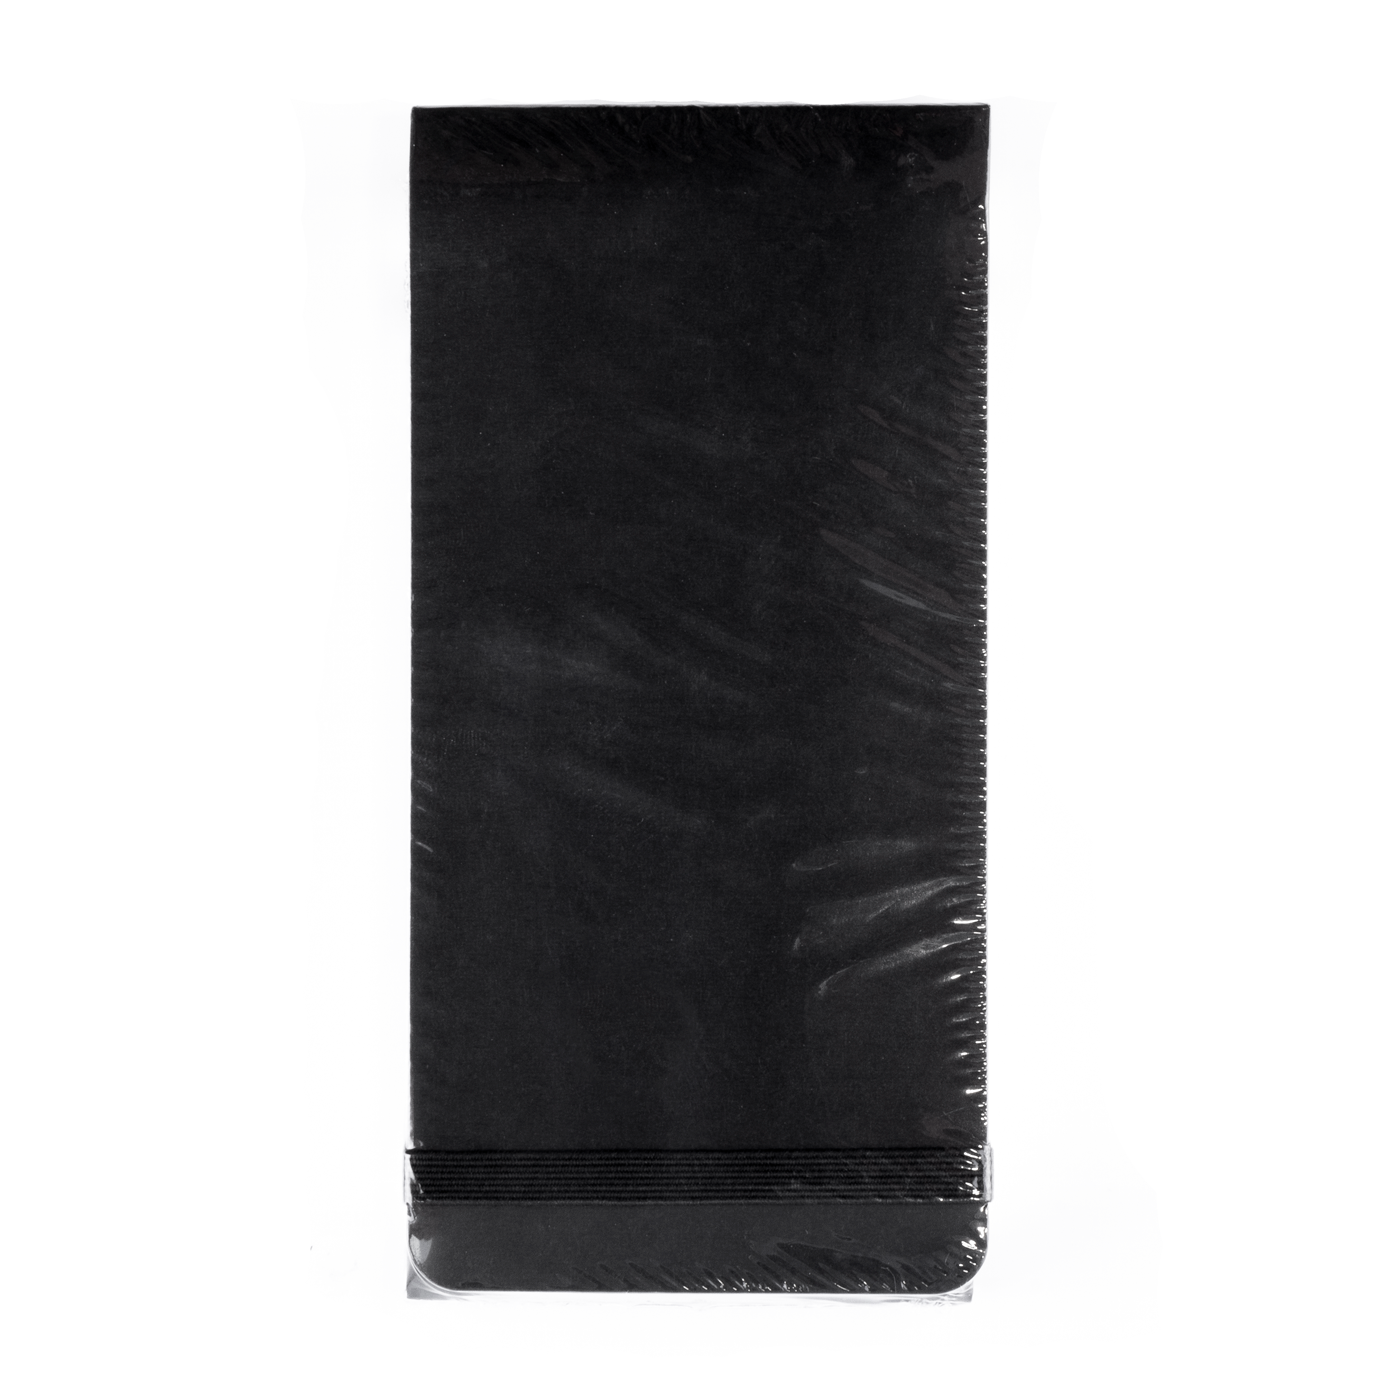 Blackwing Reporter Pad Notebook (Set of 2)- Black